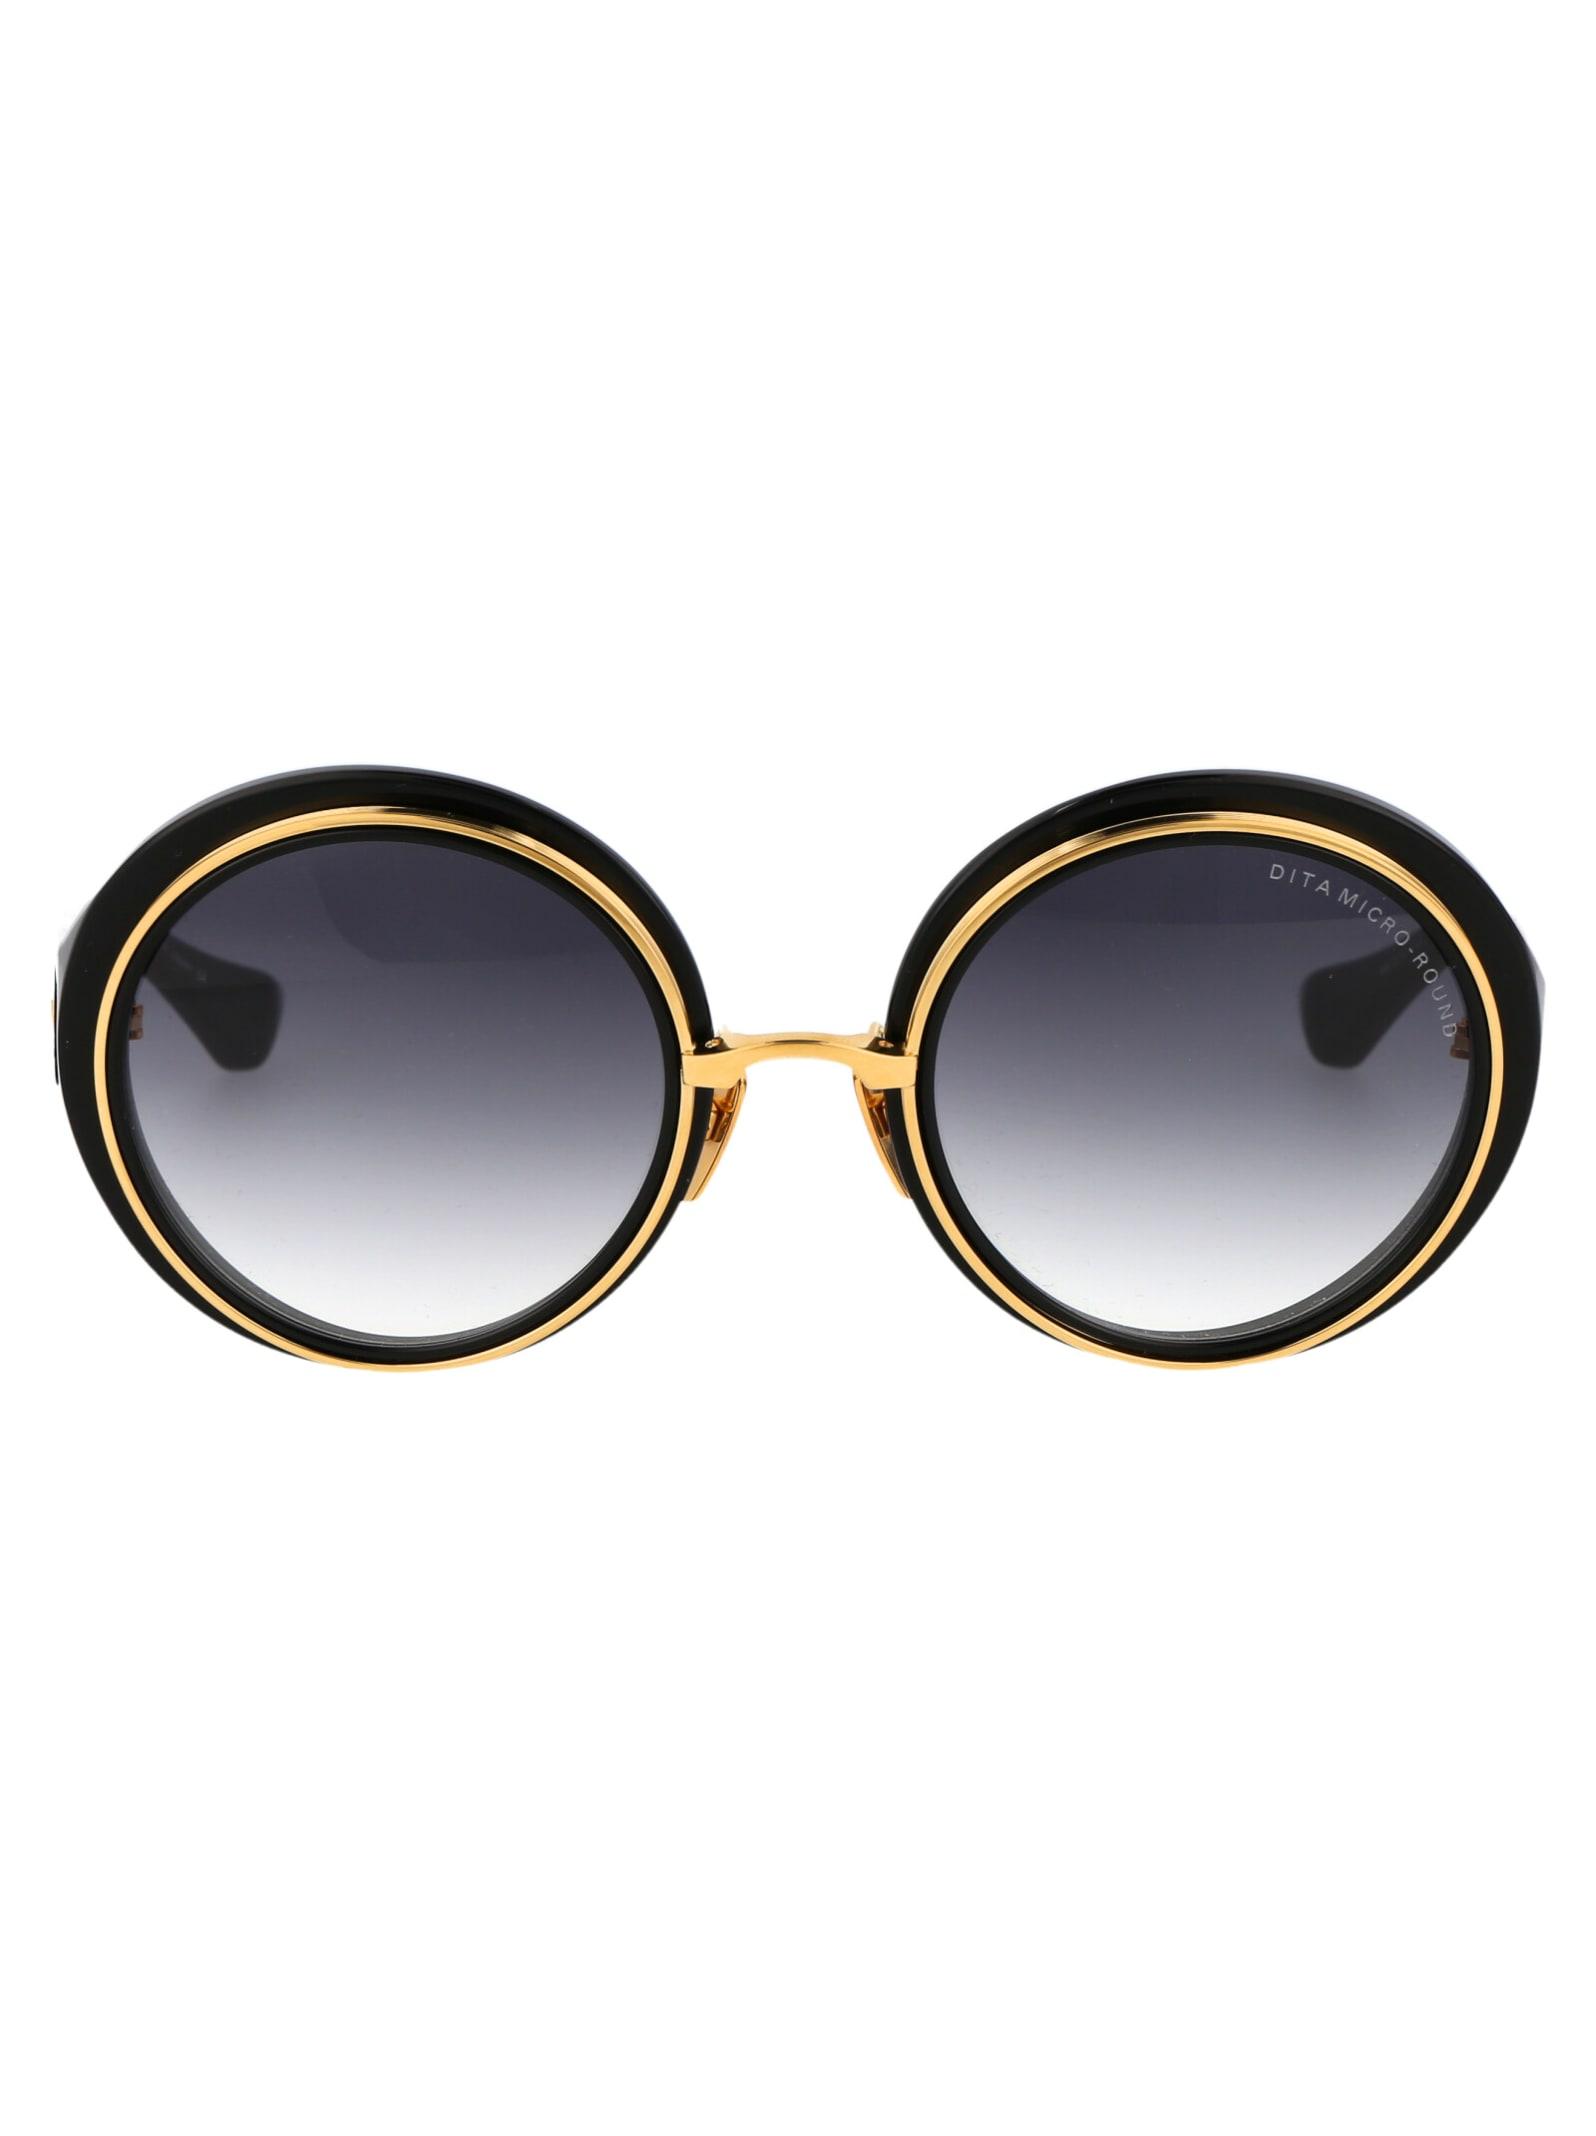 keten Zakenman Azijn Dita Eyewear Micro-round Sunglasses in Black | Lyst